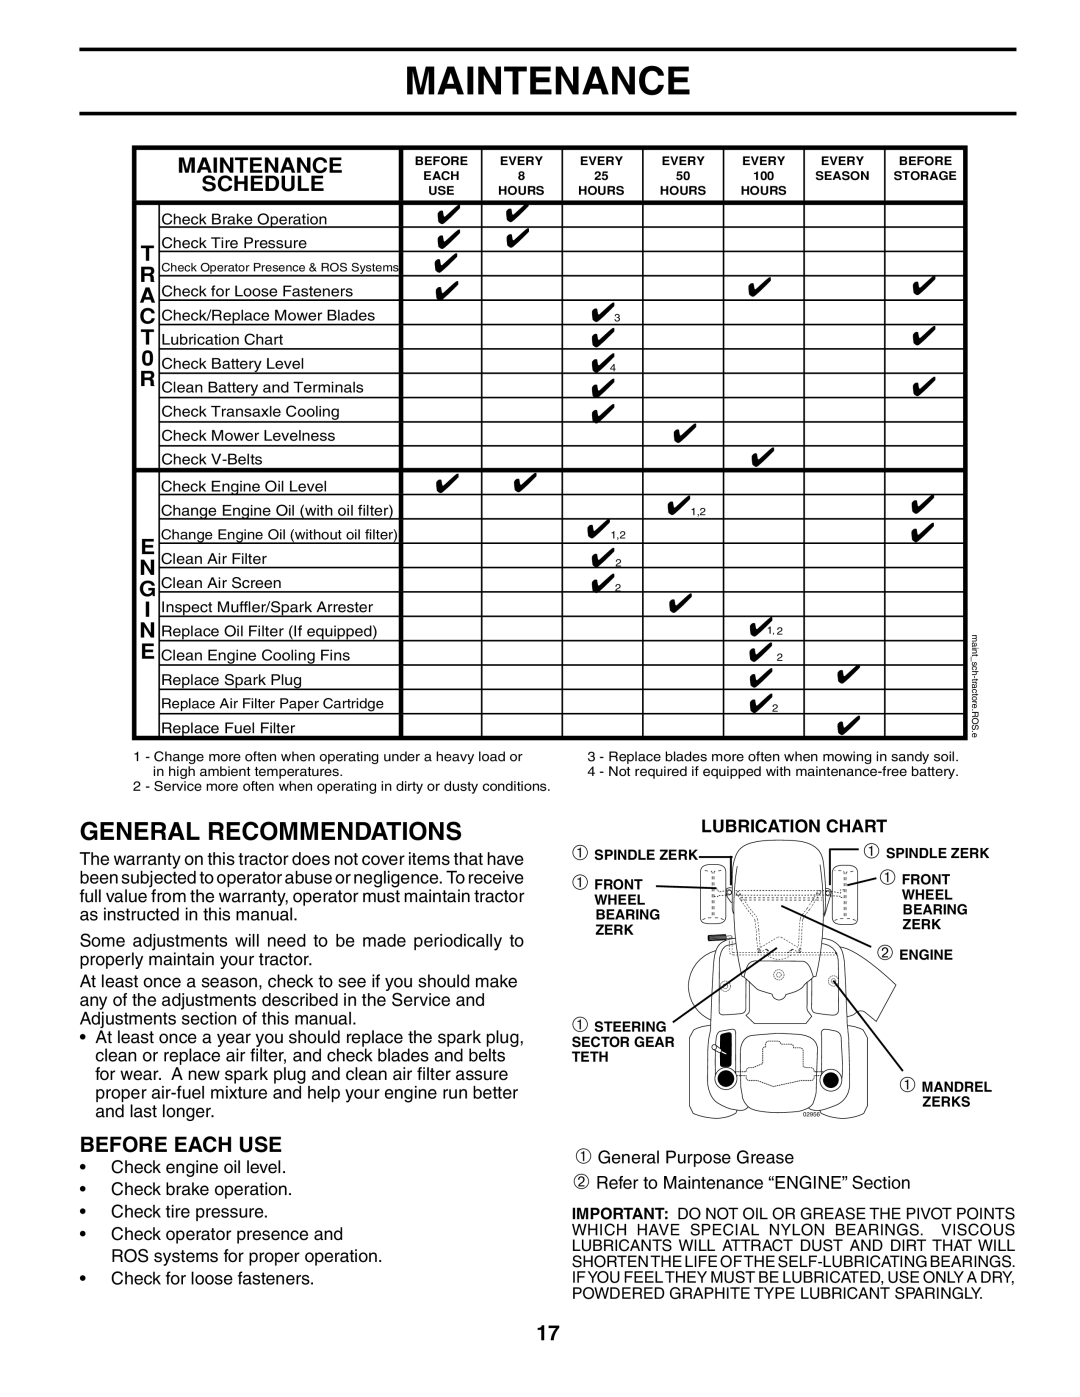 Poulan 402495 manual Maintenance, Lubrication Chart, ➀ SPINDLE ZERK ➀ FRONT WHEEL BEARING ZERK ➀ STEERING SECTOR GEAR TETH 